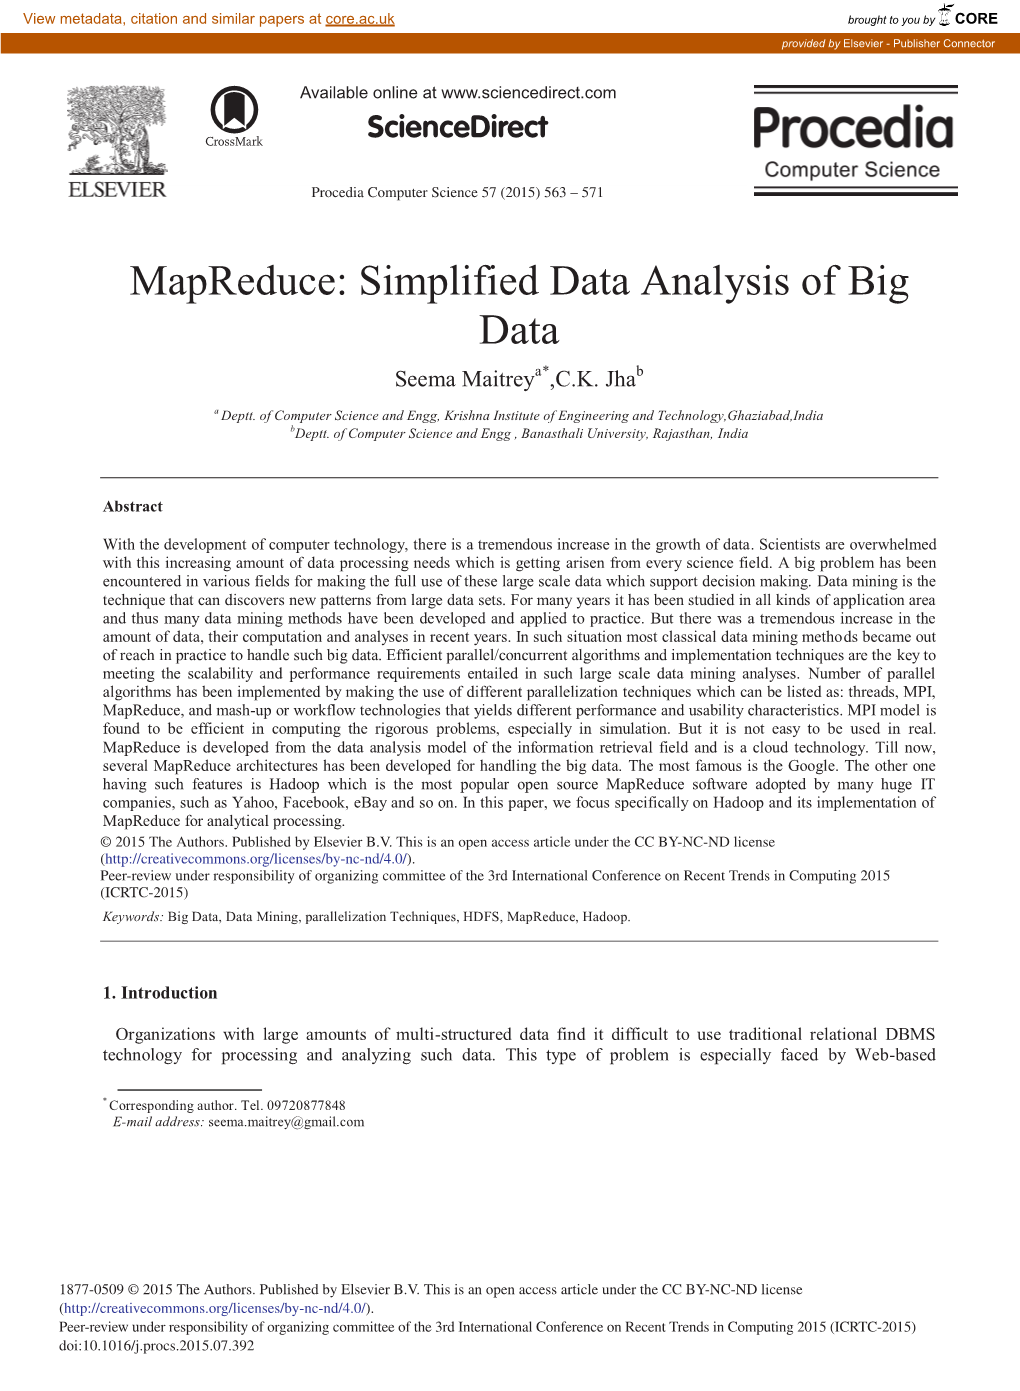 Mapreduce: Simplified Data Analysis of Big Data Seema Maitreya*,C.K